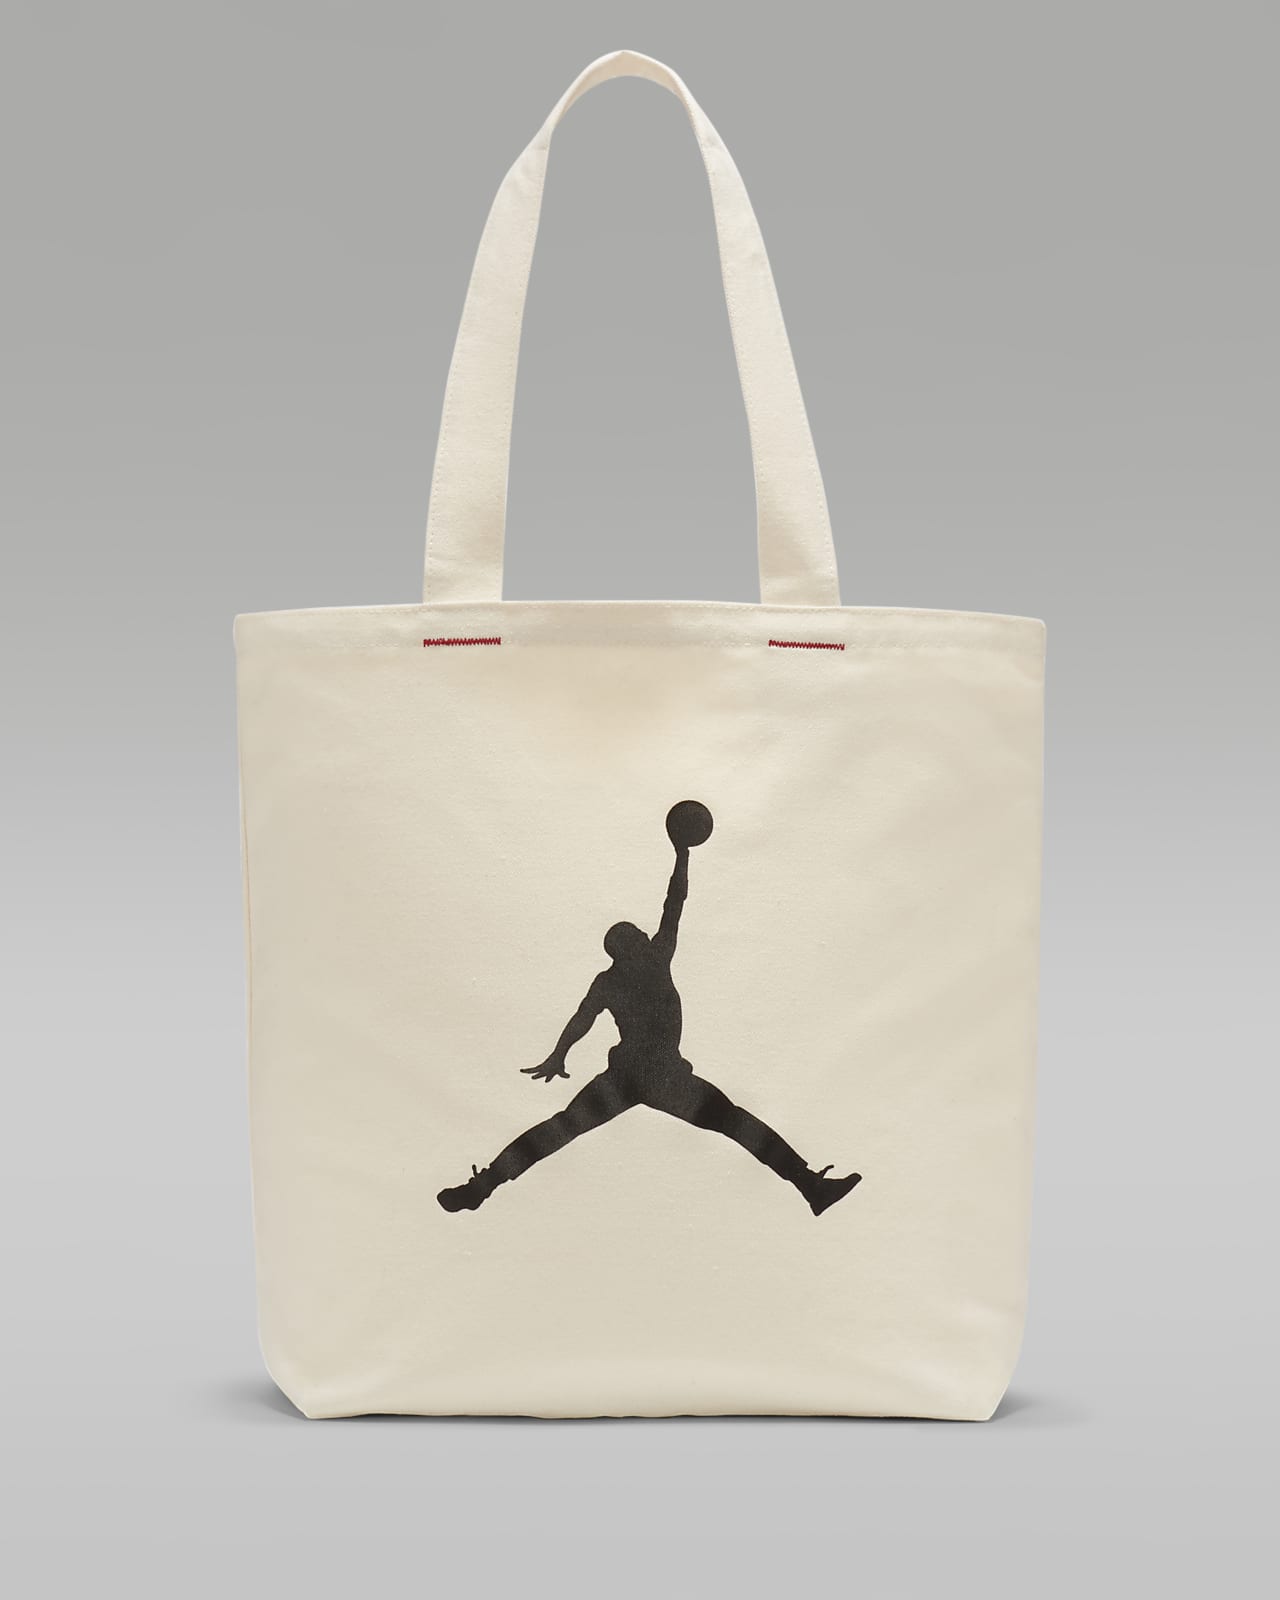 Nike Swoosh Canvas Tote Bag in Natural